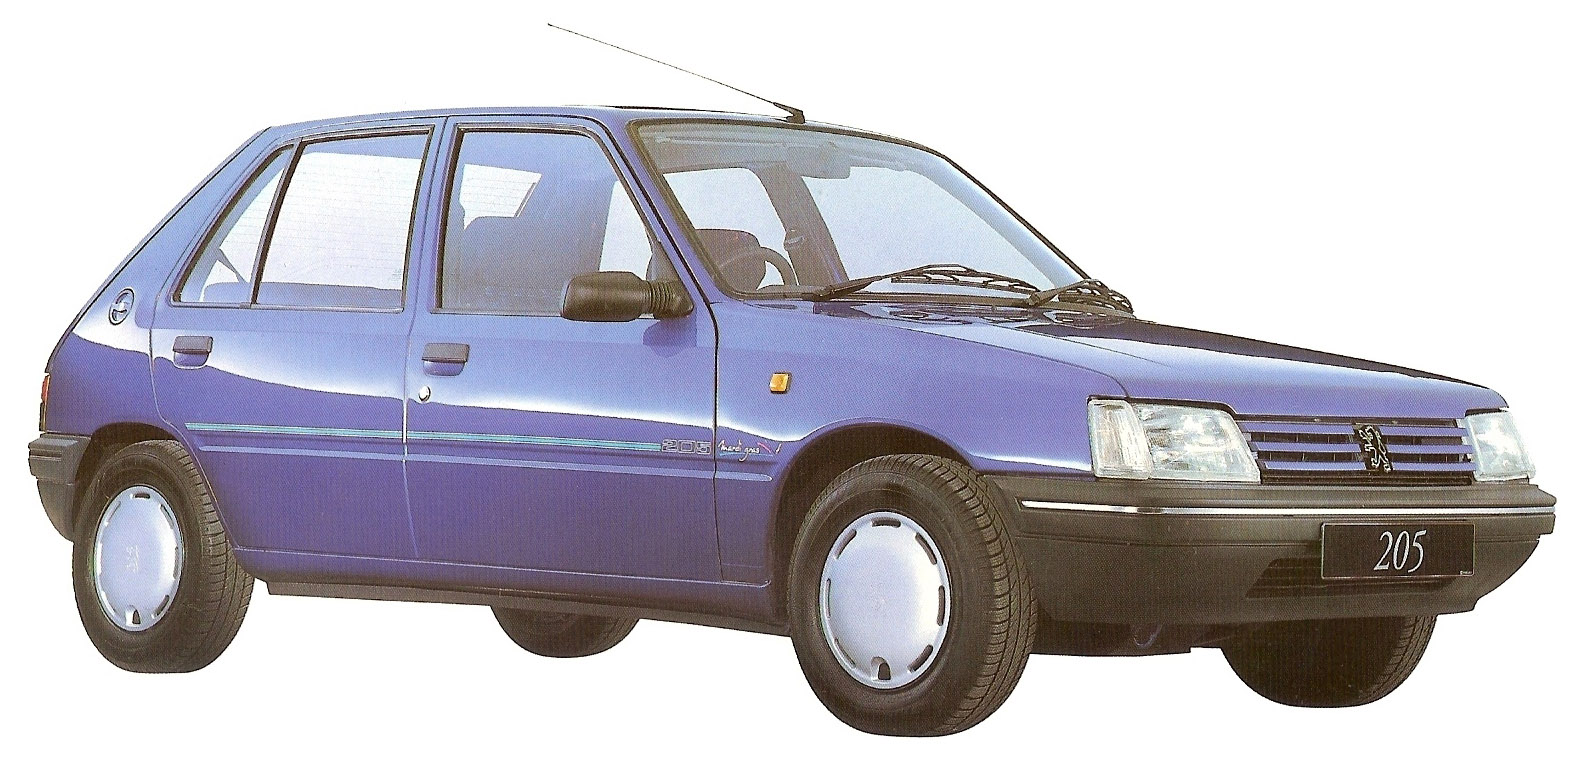 1995 Peugeot 205 Mardi Gras